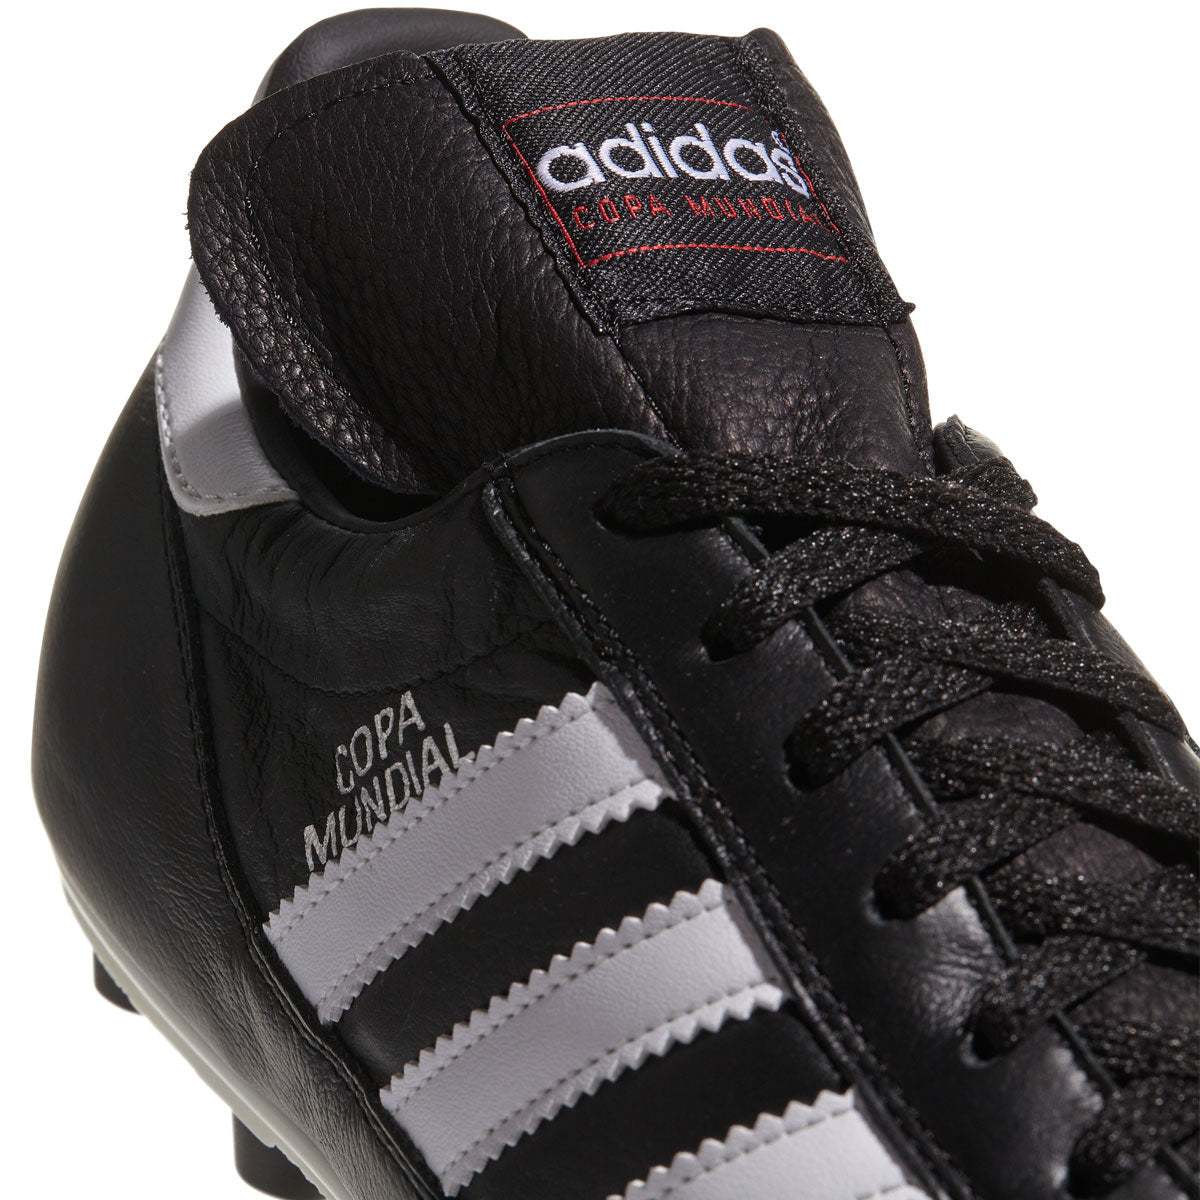 adidas Copa Mundial FG Football Boots - Youth - Black/White